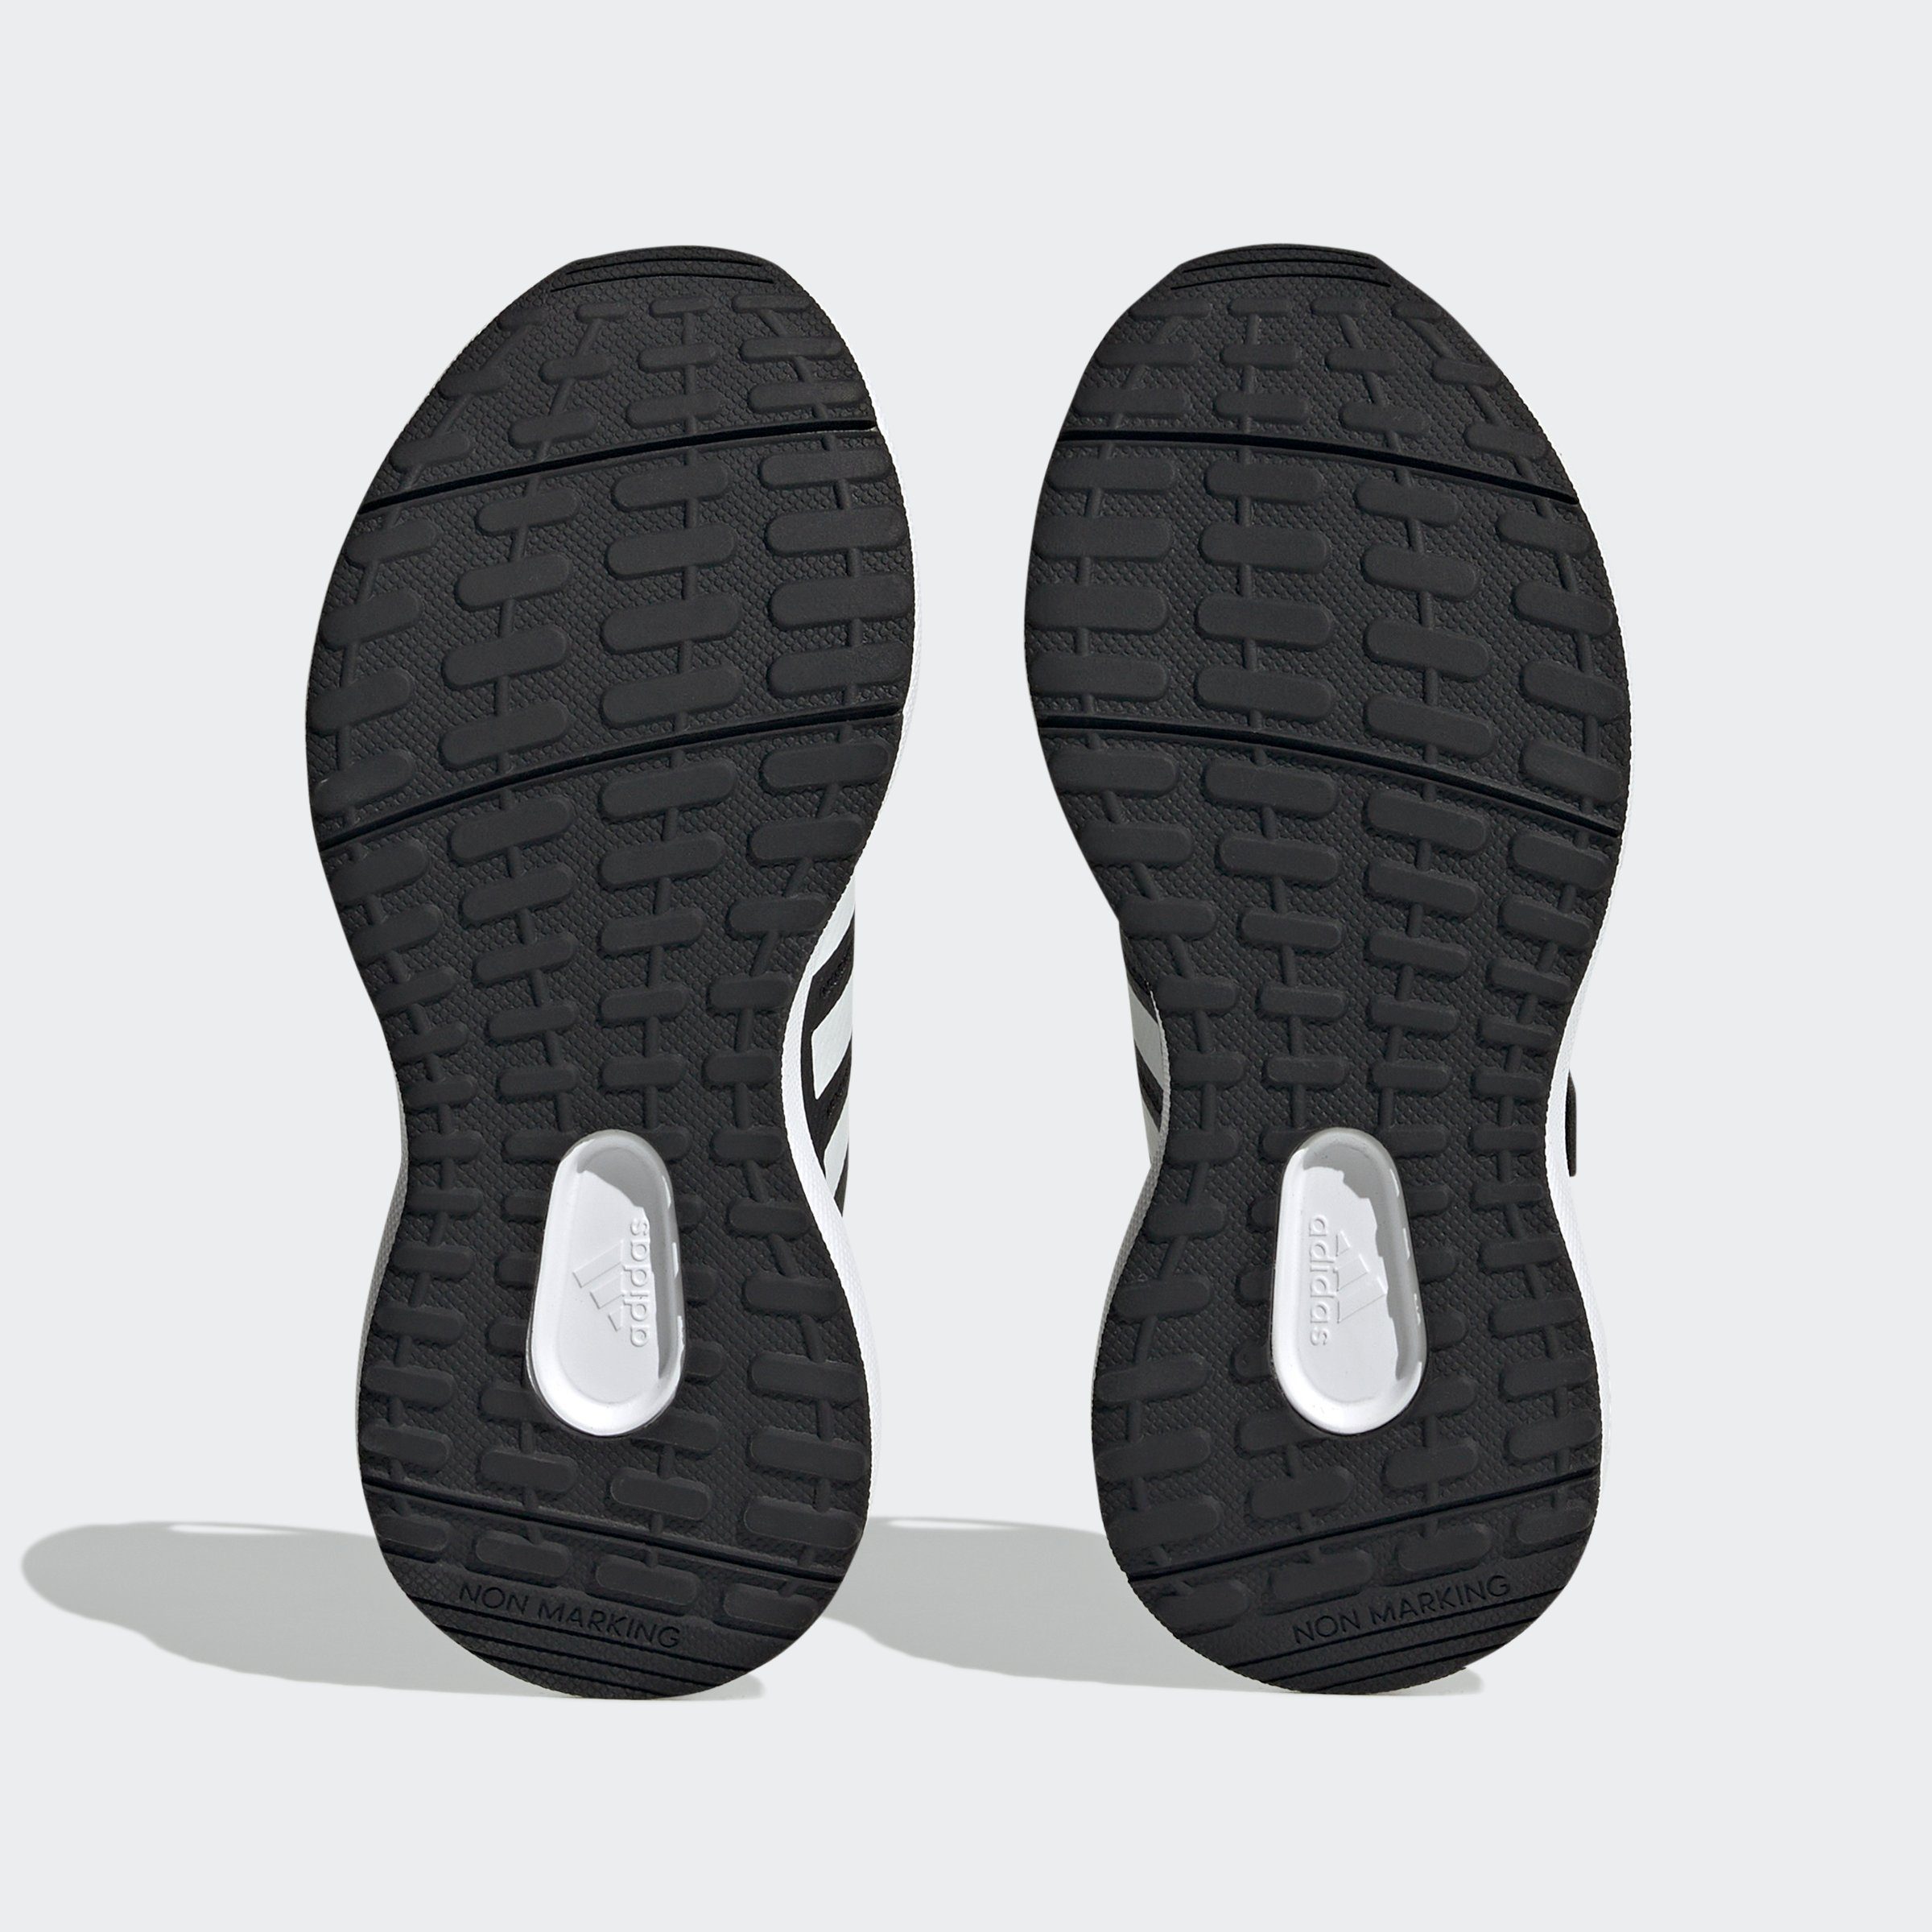 ELASTIC / Core TOP Black STRAP 2.0 CLOUDFOAM Sportswear FORTARUN Black Core / Sneaker adidas LACE Cloud White